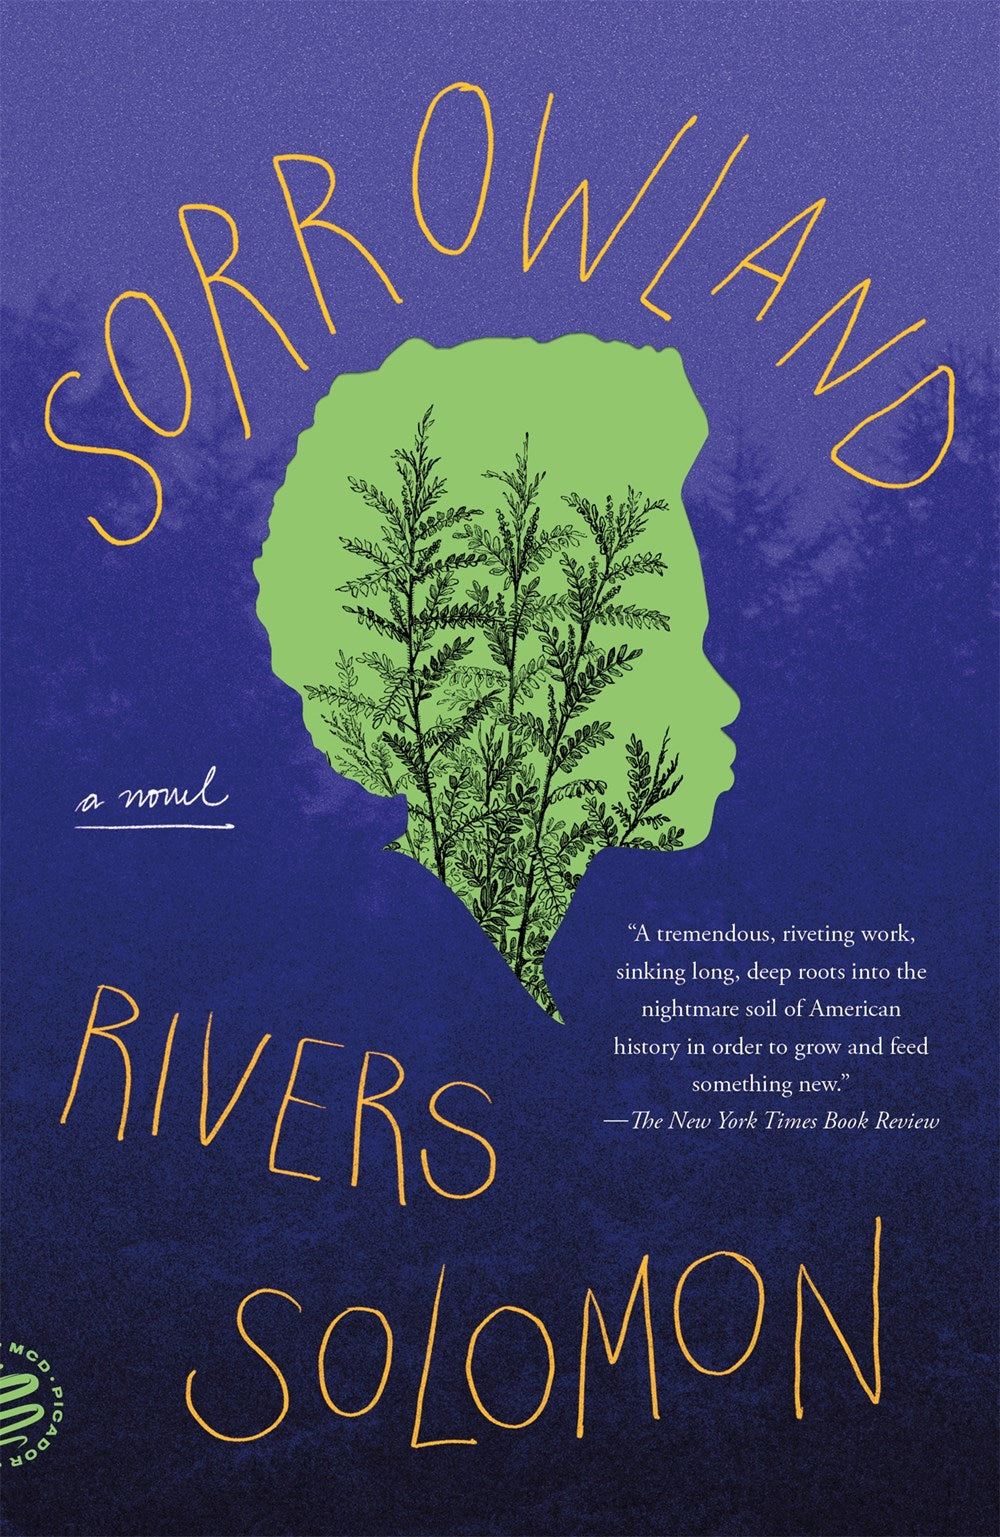 Sorrowland: A Novel by Rivers Solomon